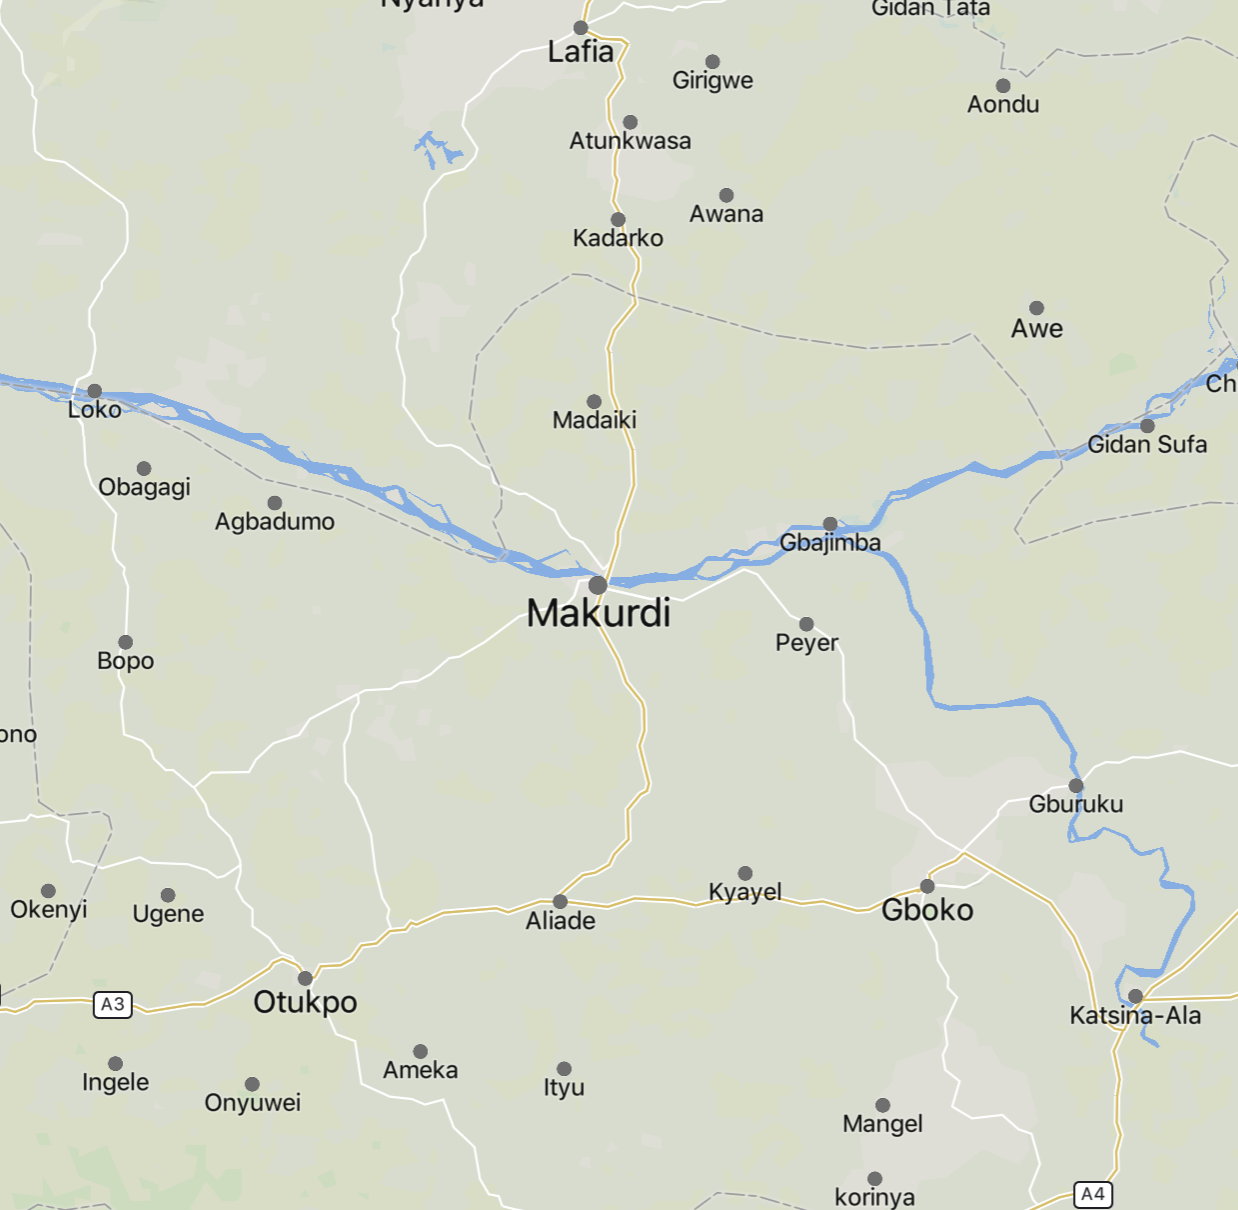 TRAC Incident Report: Bandits Destroyed Power Lines In Makurdi, Benue, Nigeria - 1 September 2023